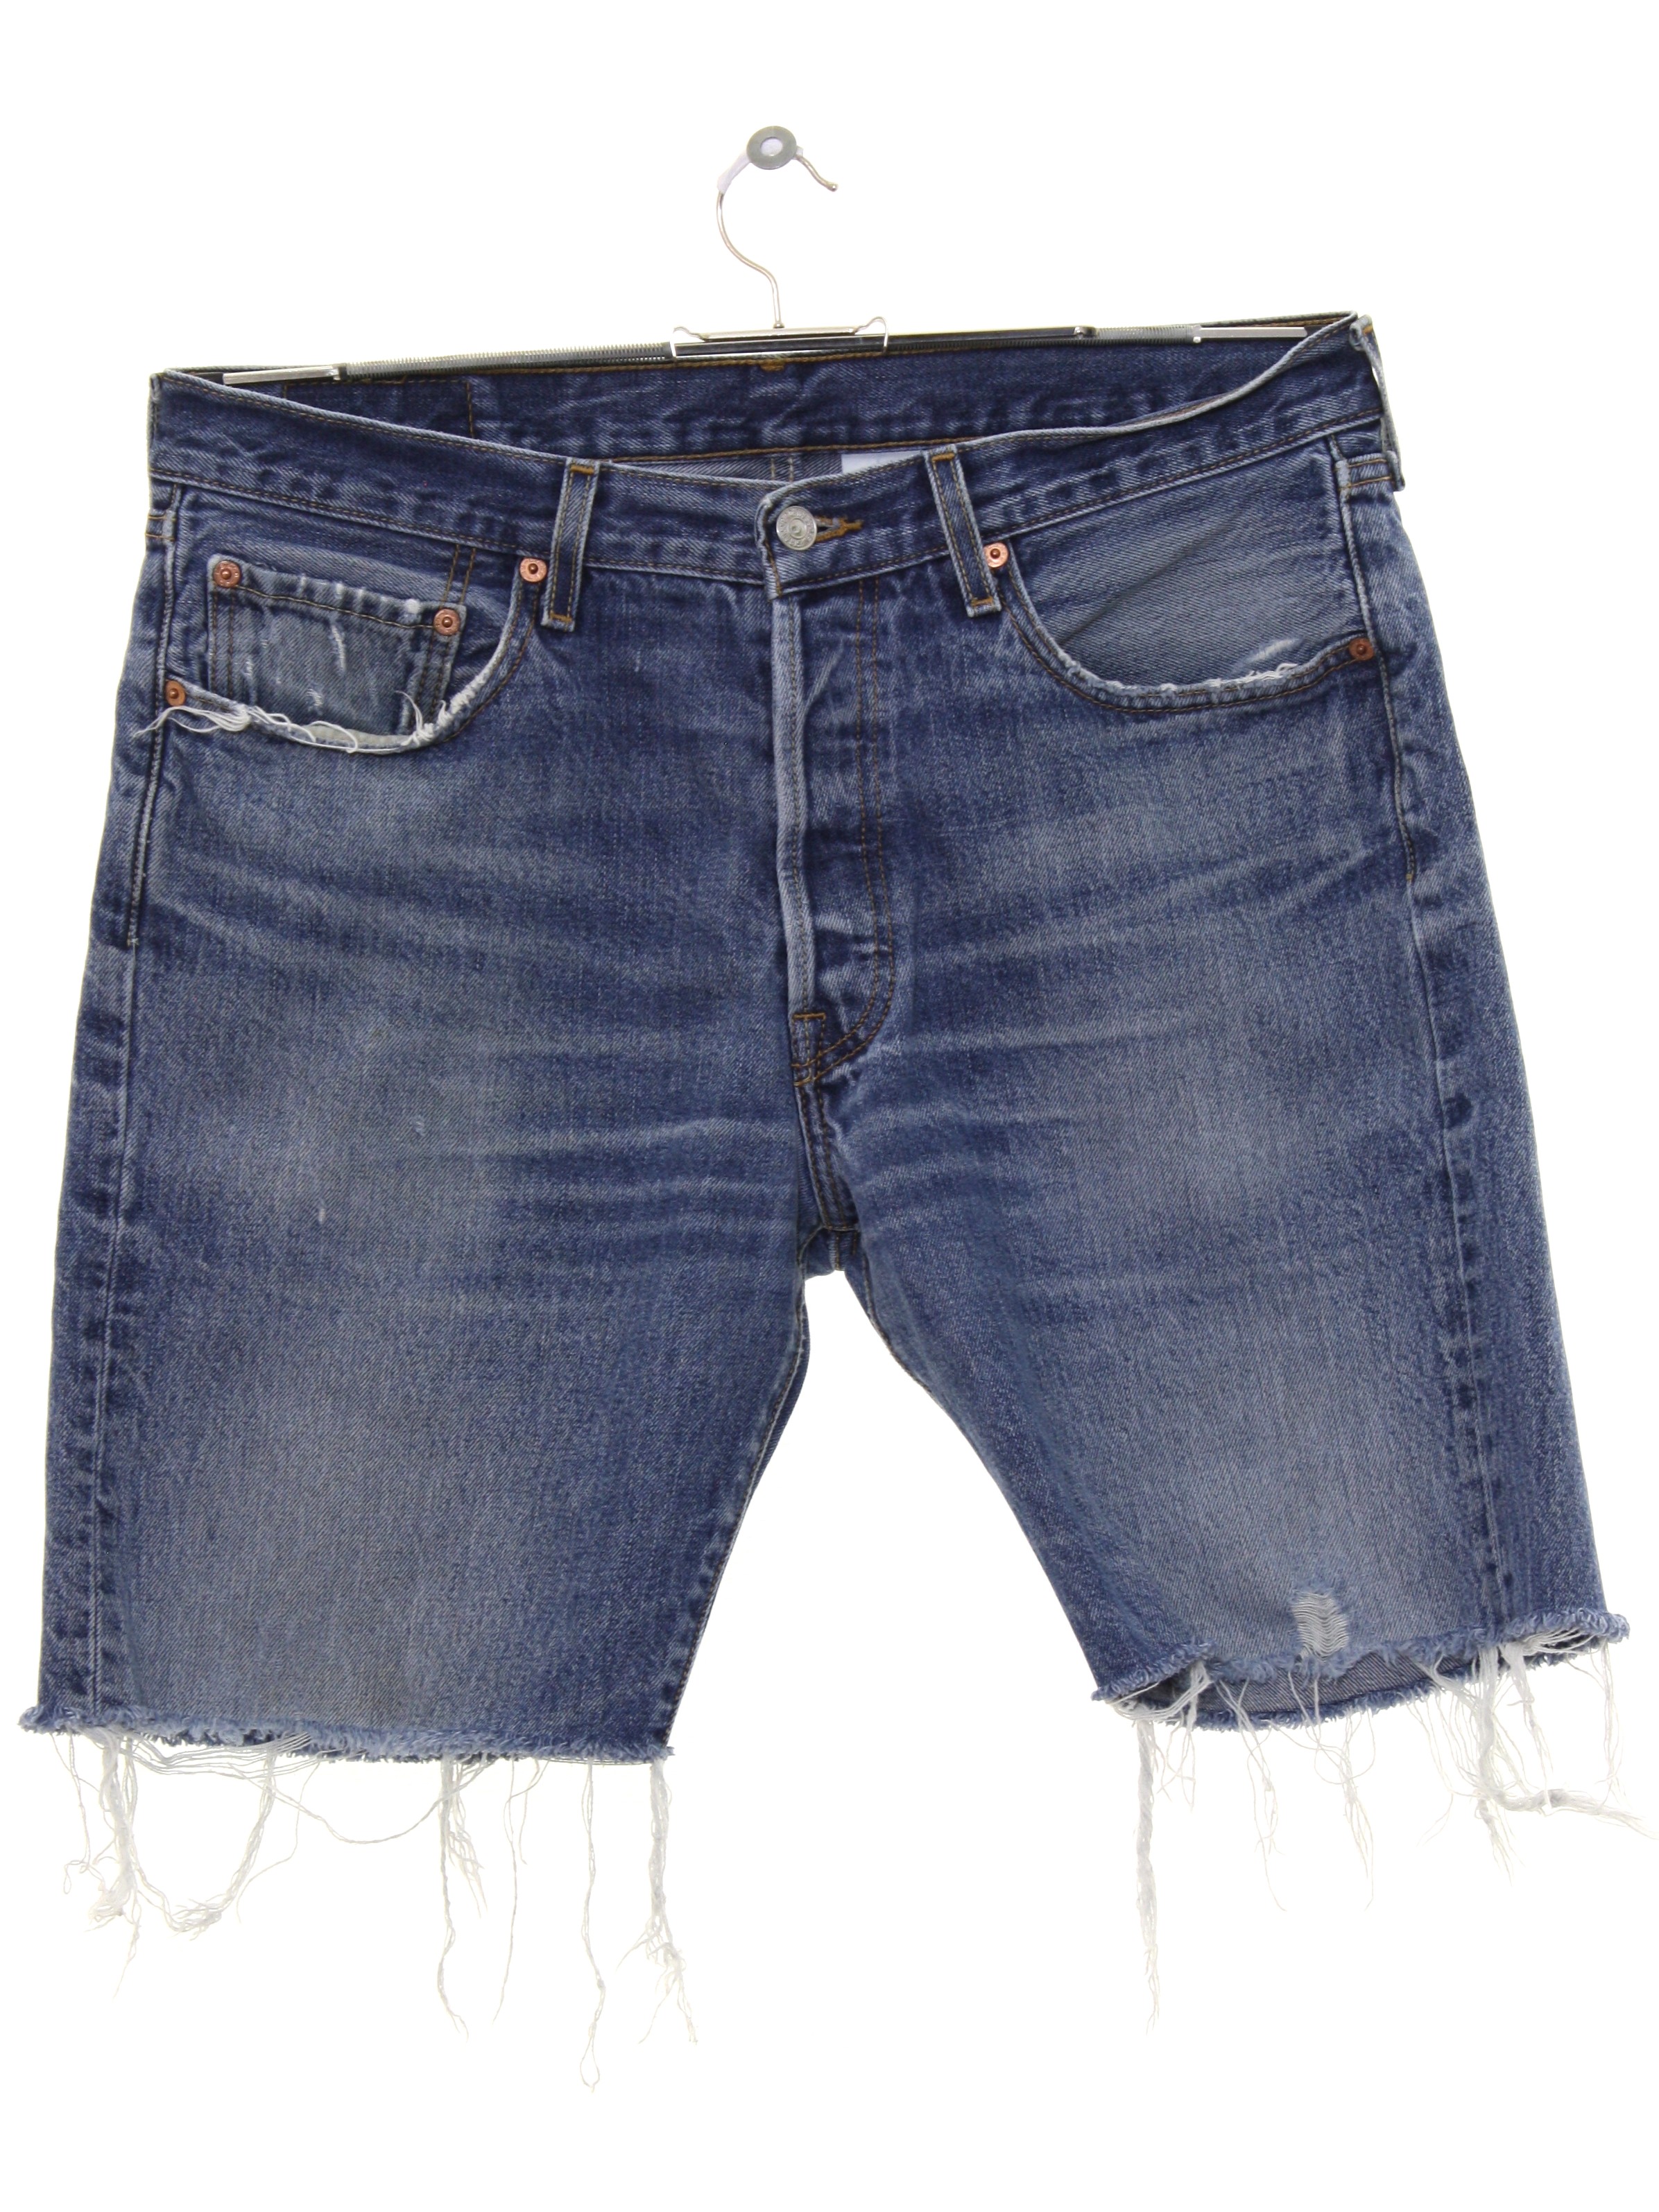 levi jean shorts vintage